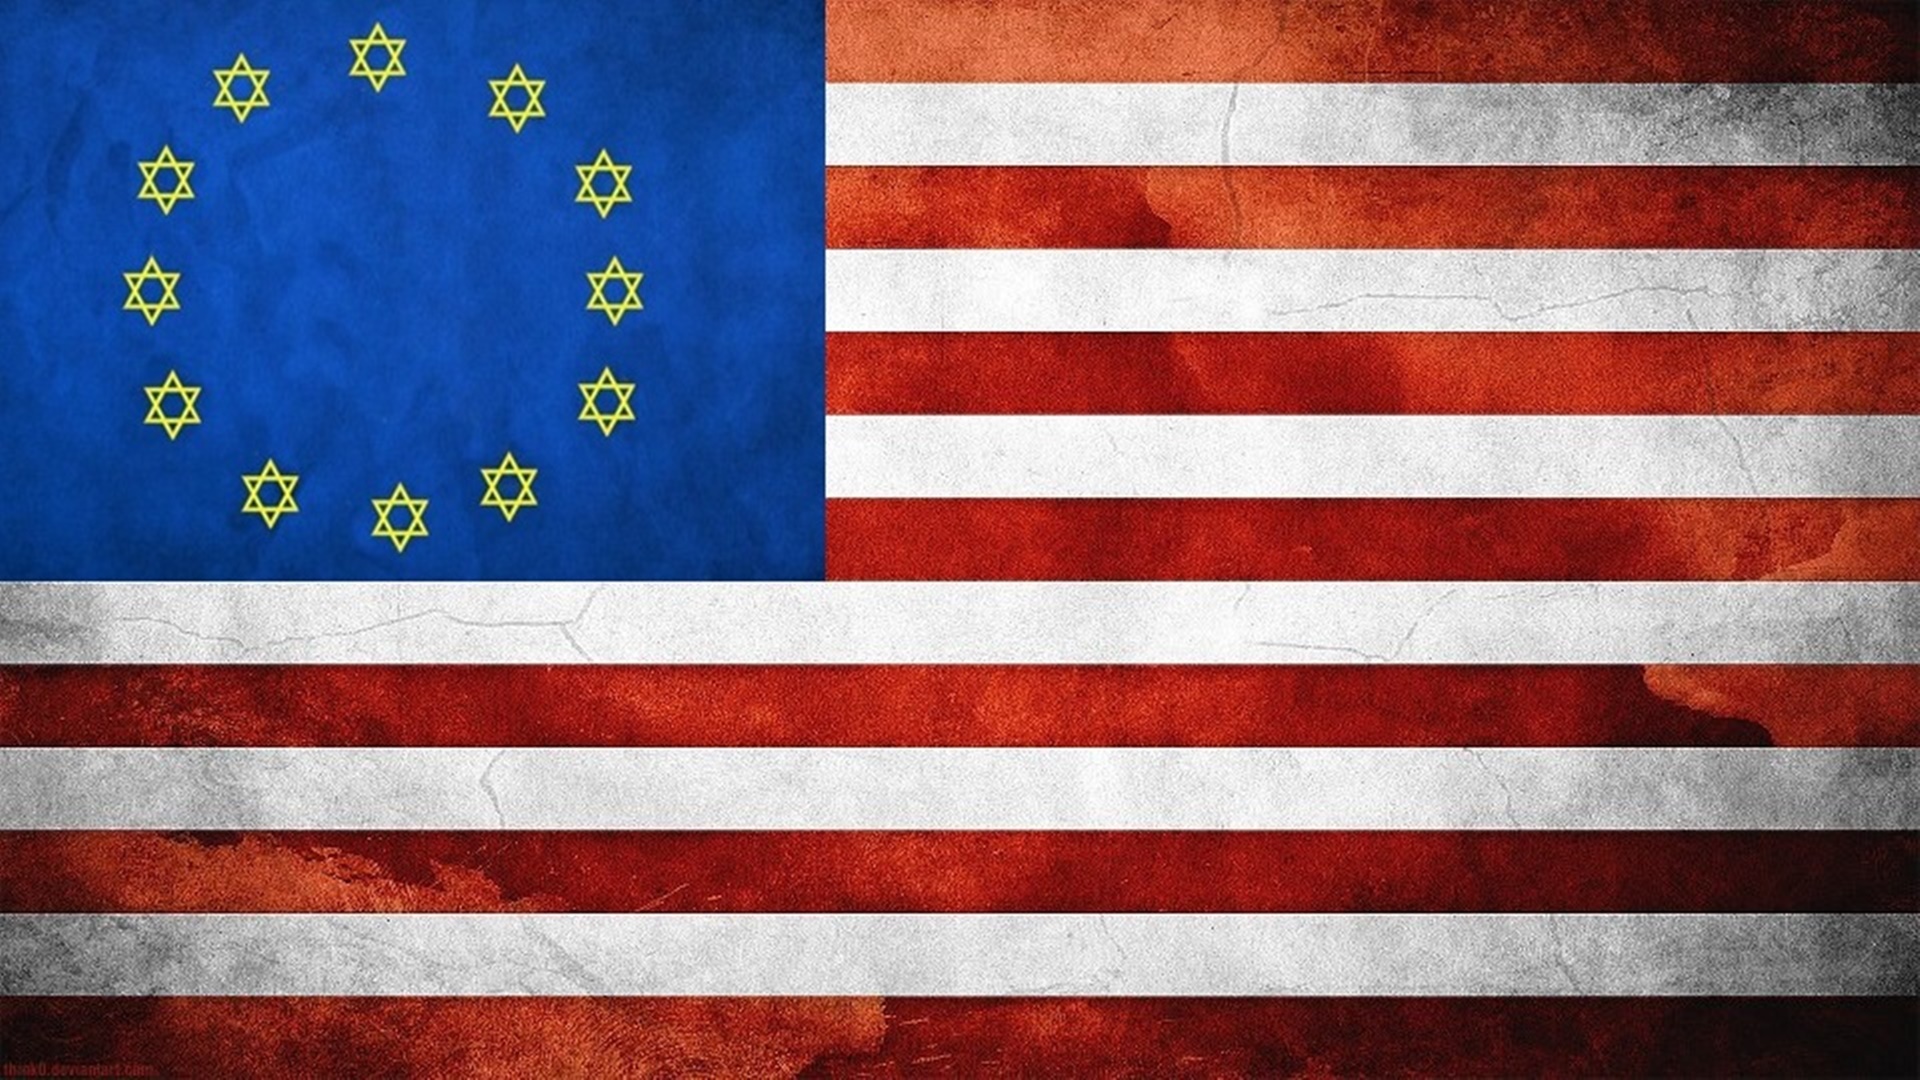 General 1920x1080 USA Star of David Israel American flag Europe European Union politics digital art